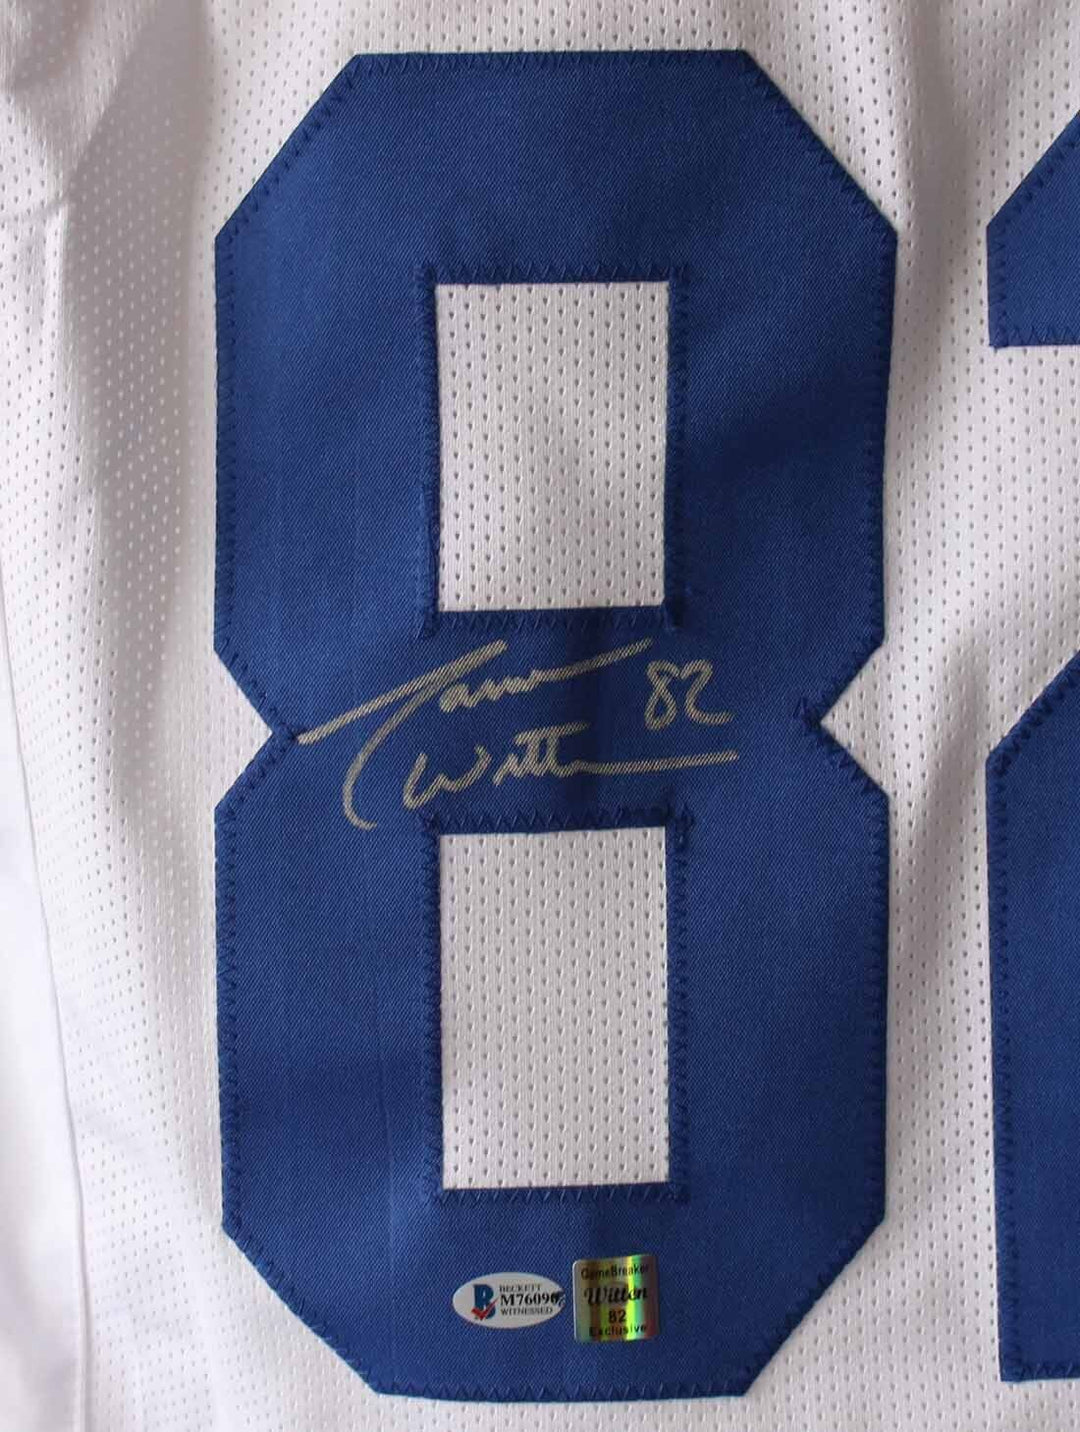 Jason Witten Autographed/Signed Dallas Cowboys White XL Jersey BAS 24172 Image 2